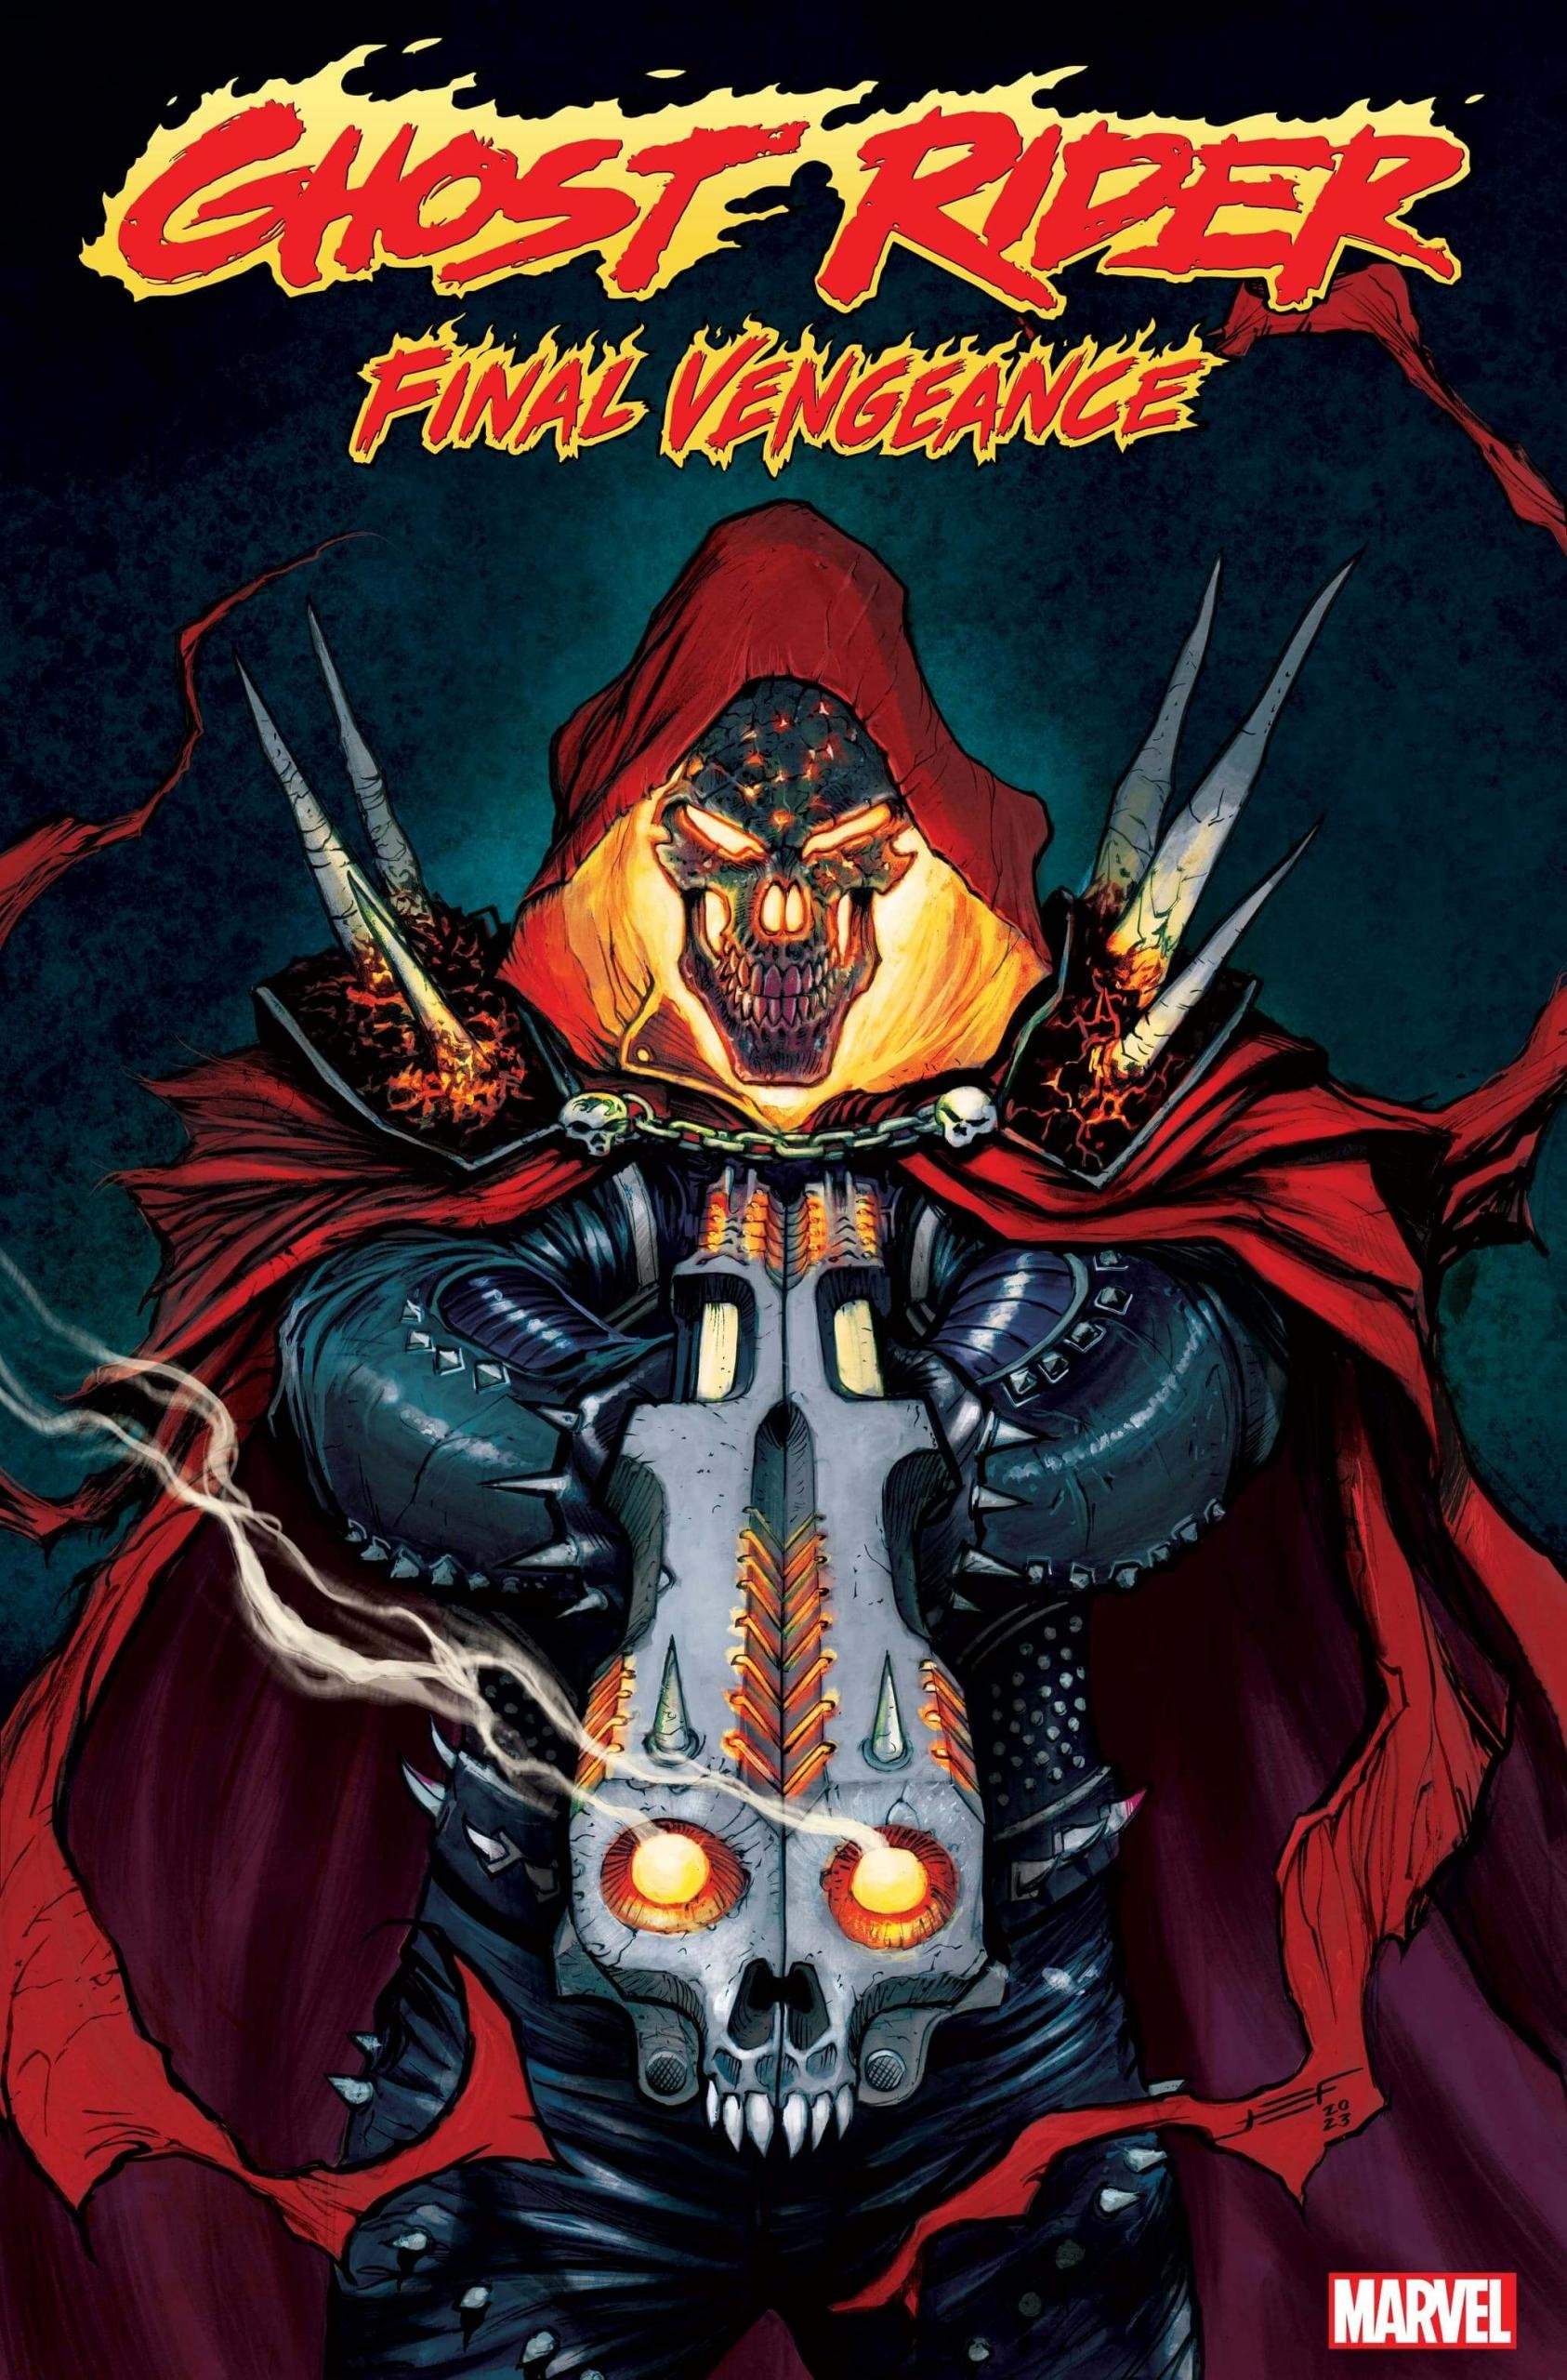 Couverture de Ghost Rider : Final Vengeance 2 par Juan Ferreyra